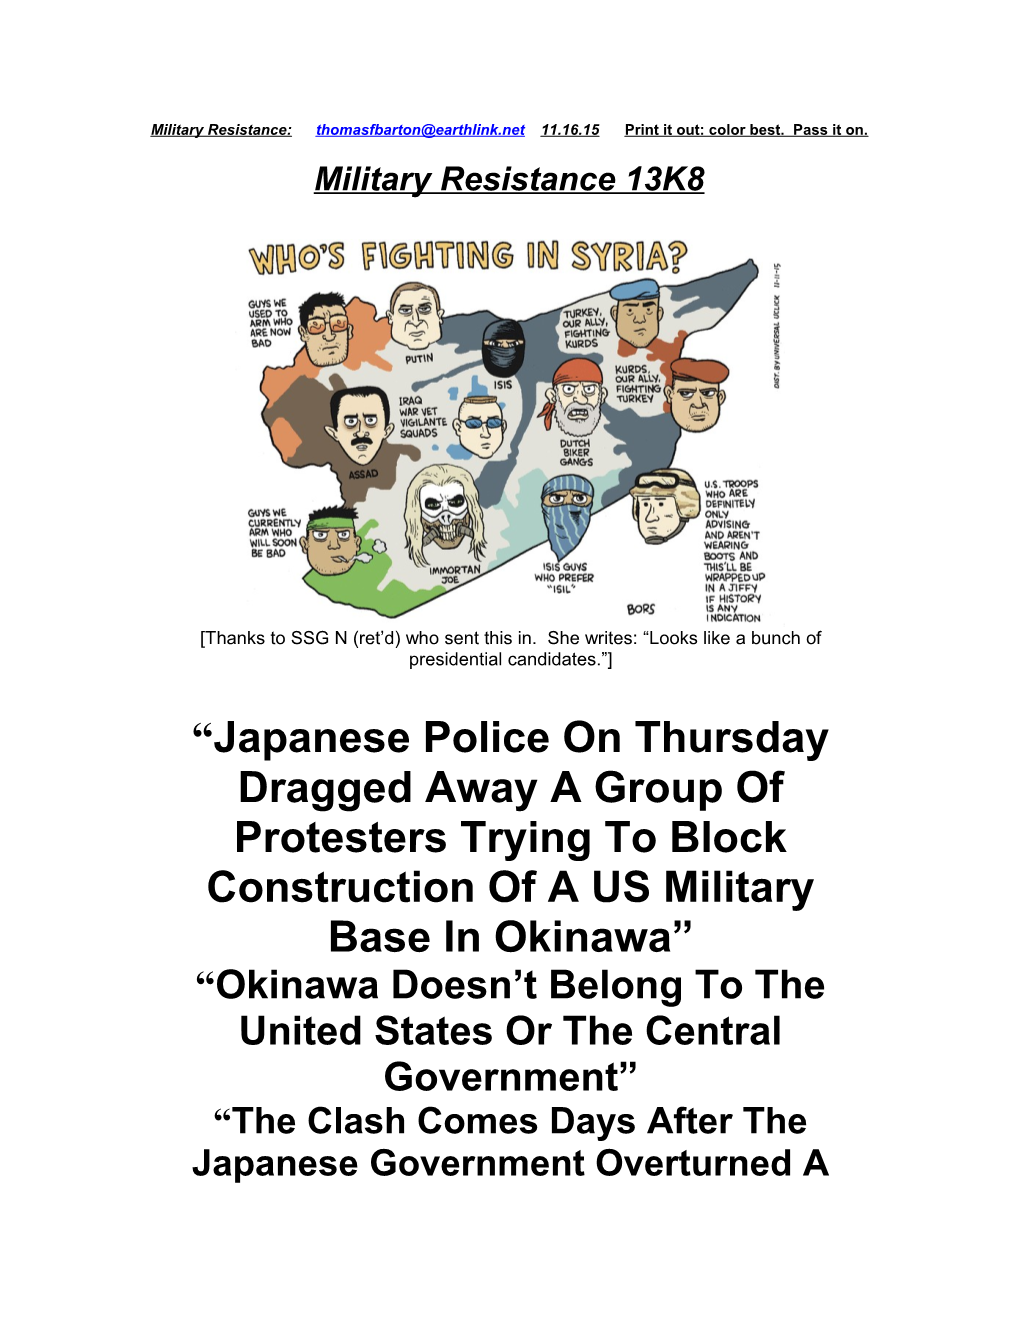 Military Resistance 13K8